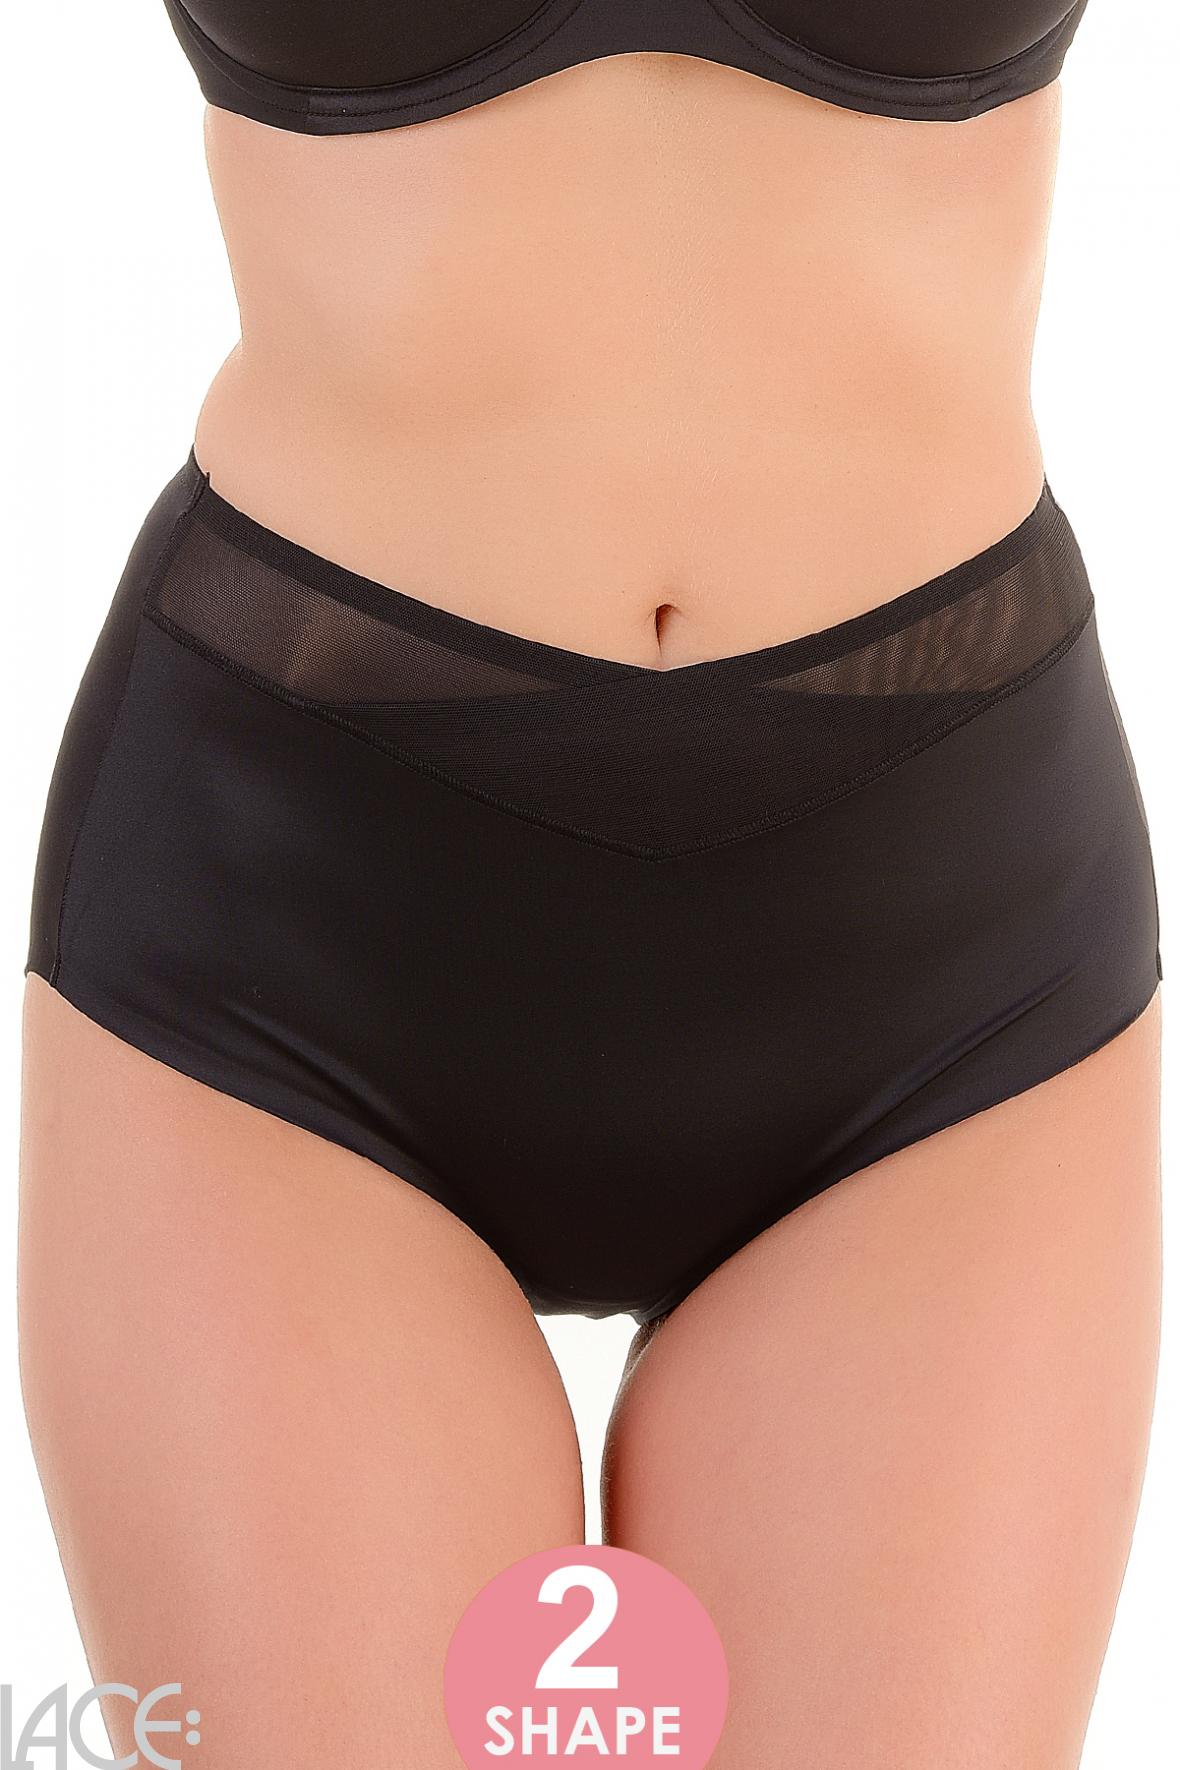 Triumph Lace ladies bikini underwear panties S M L XL White Black